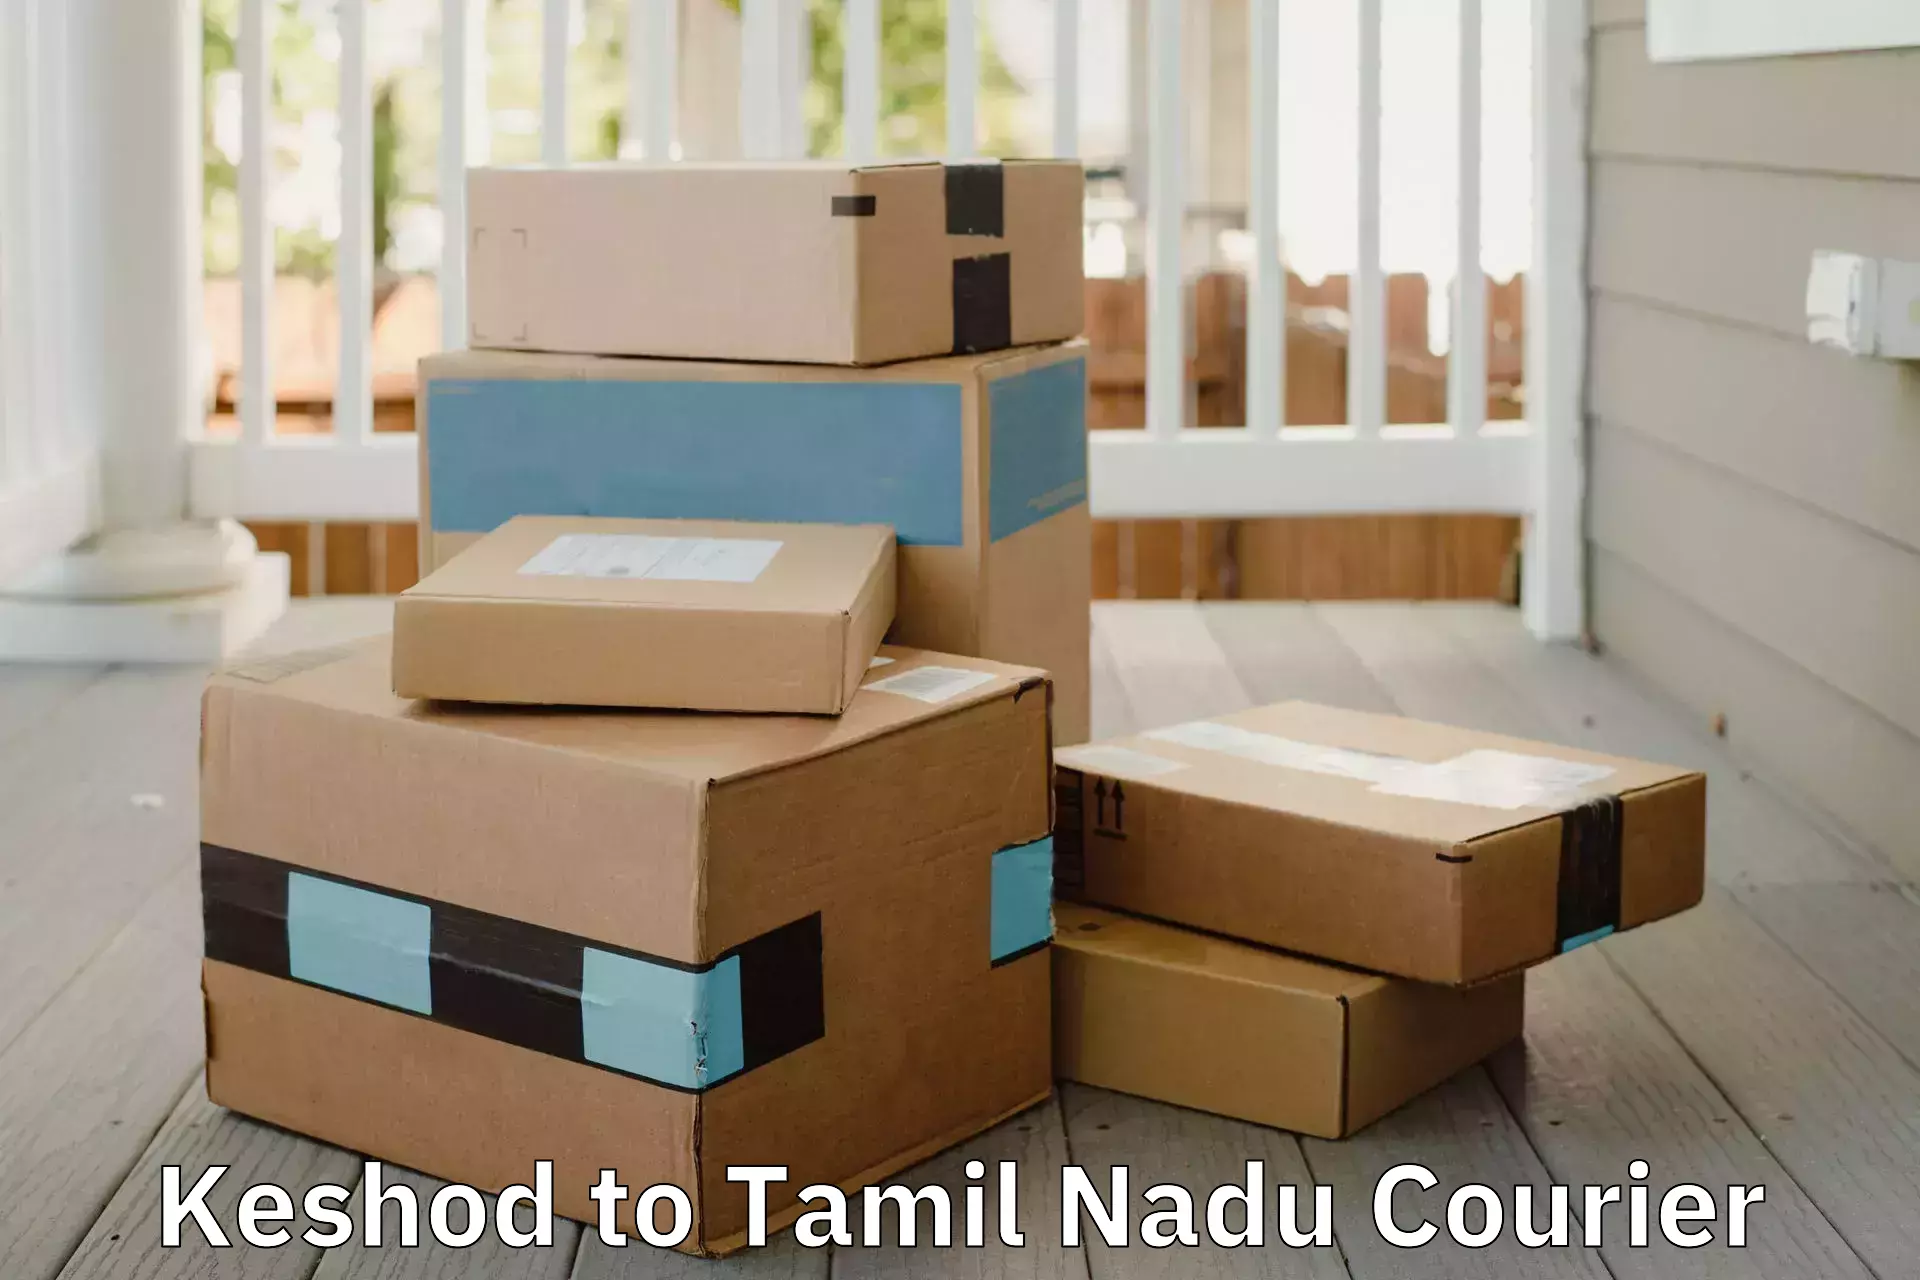 Professional moving company Keshod to Tamil Nadu